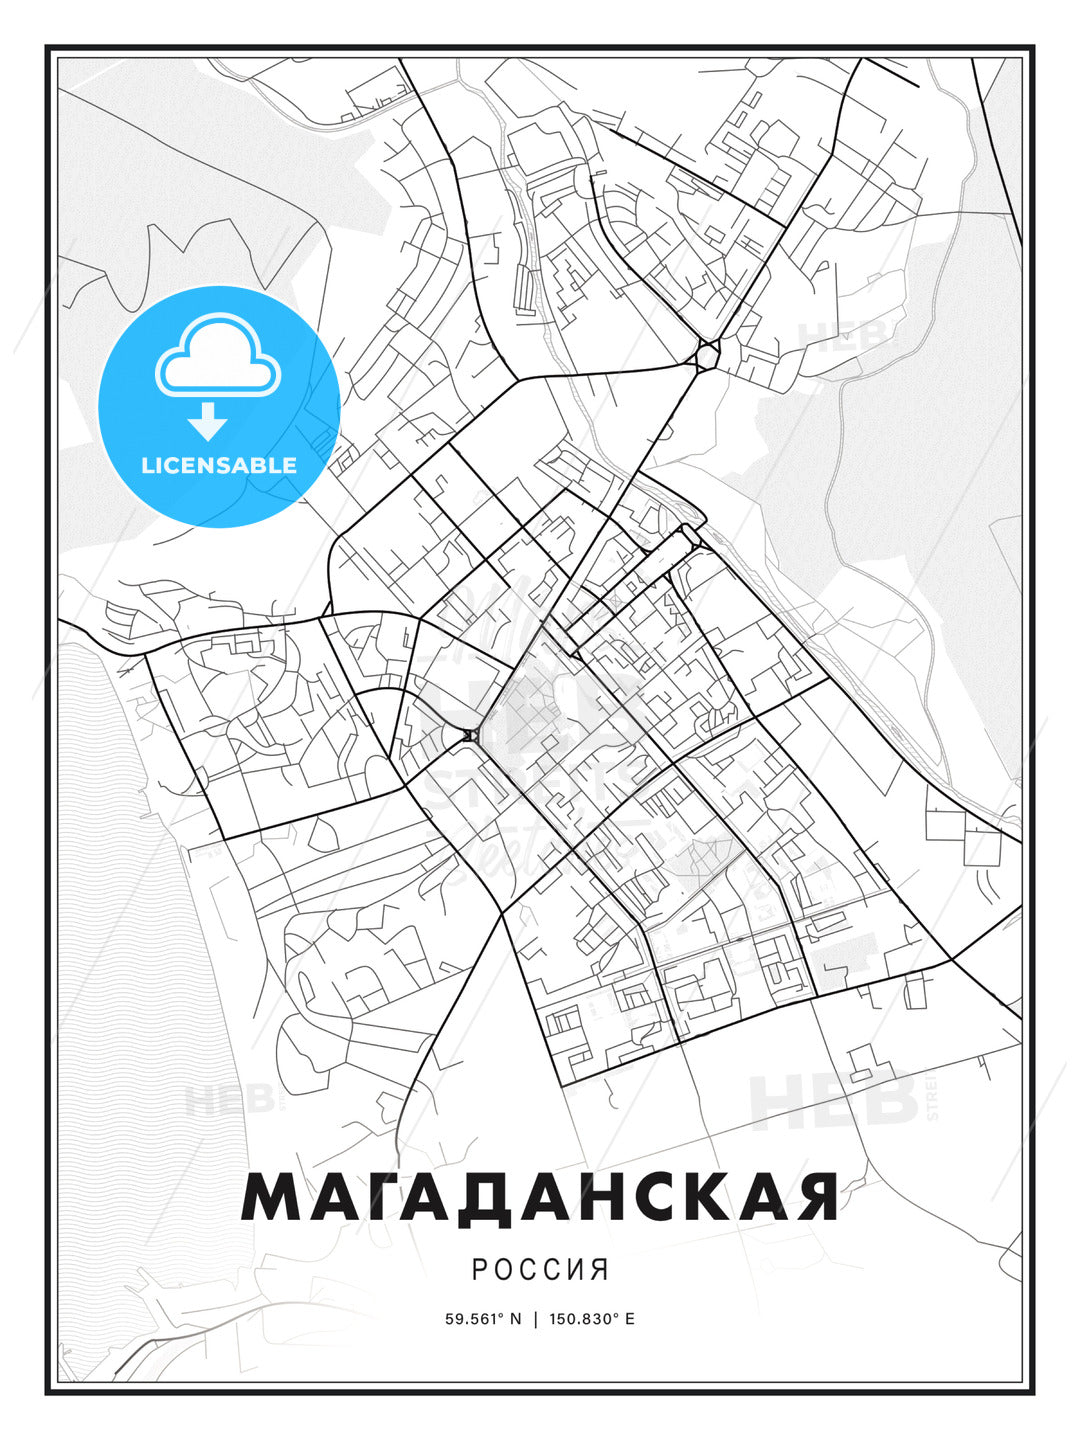 МАГАДАНСКАЯ / Magadan, Russia, Modern Print Template in Various Formats - HEBSTREITS Sketches